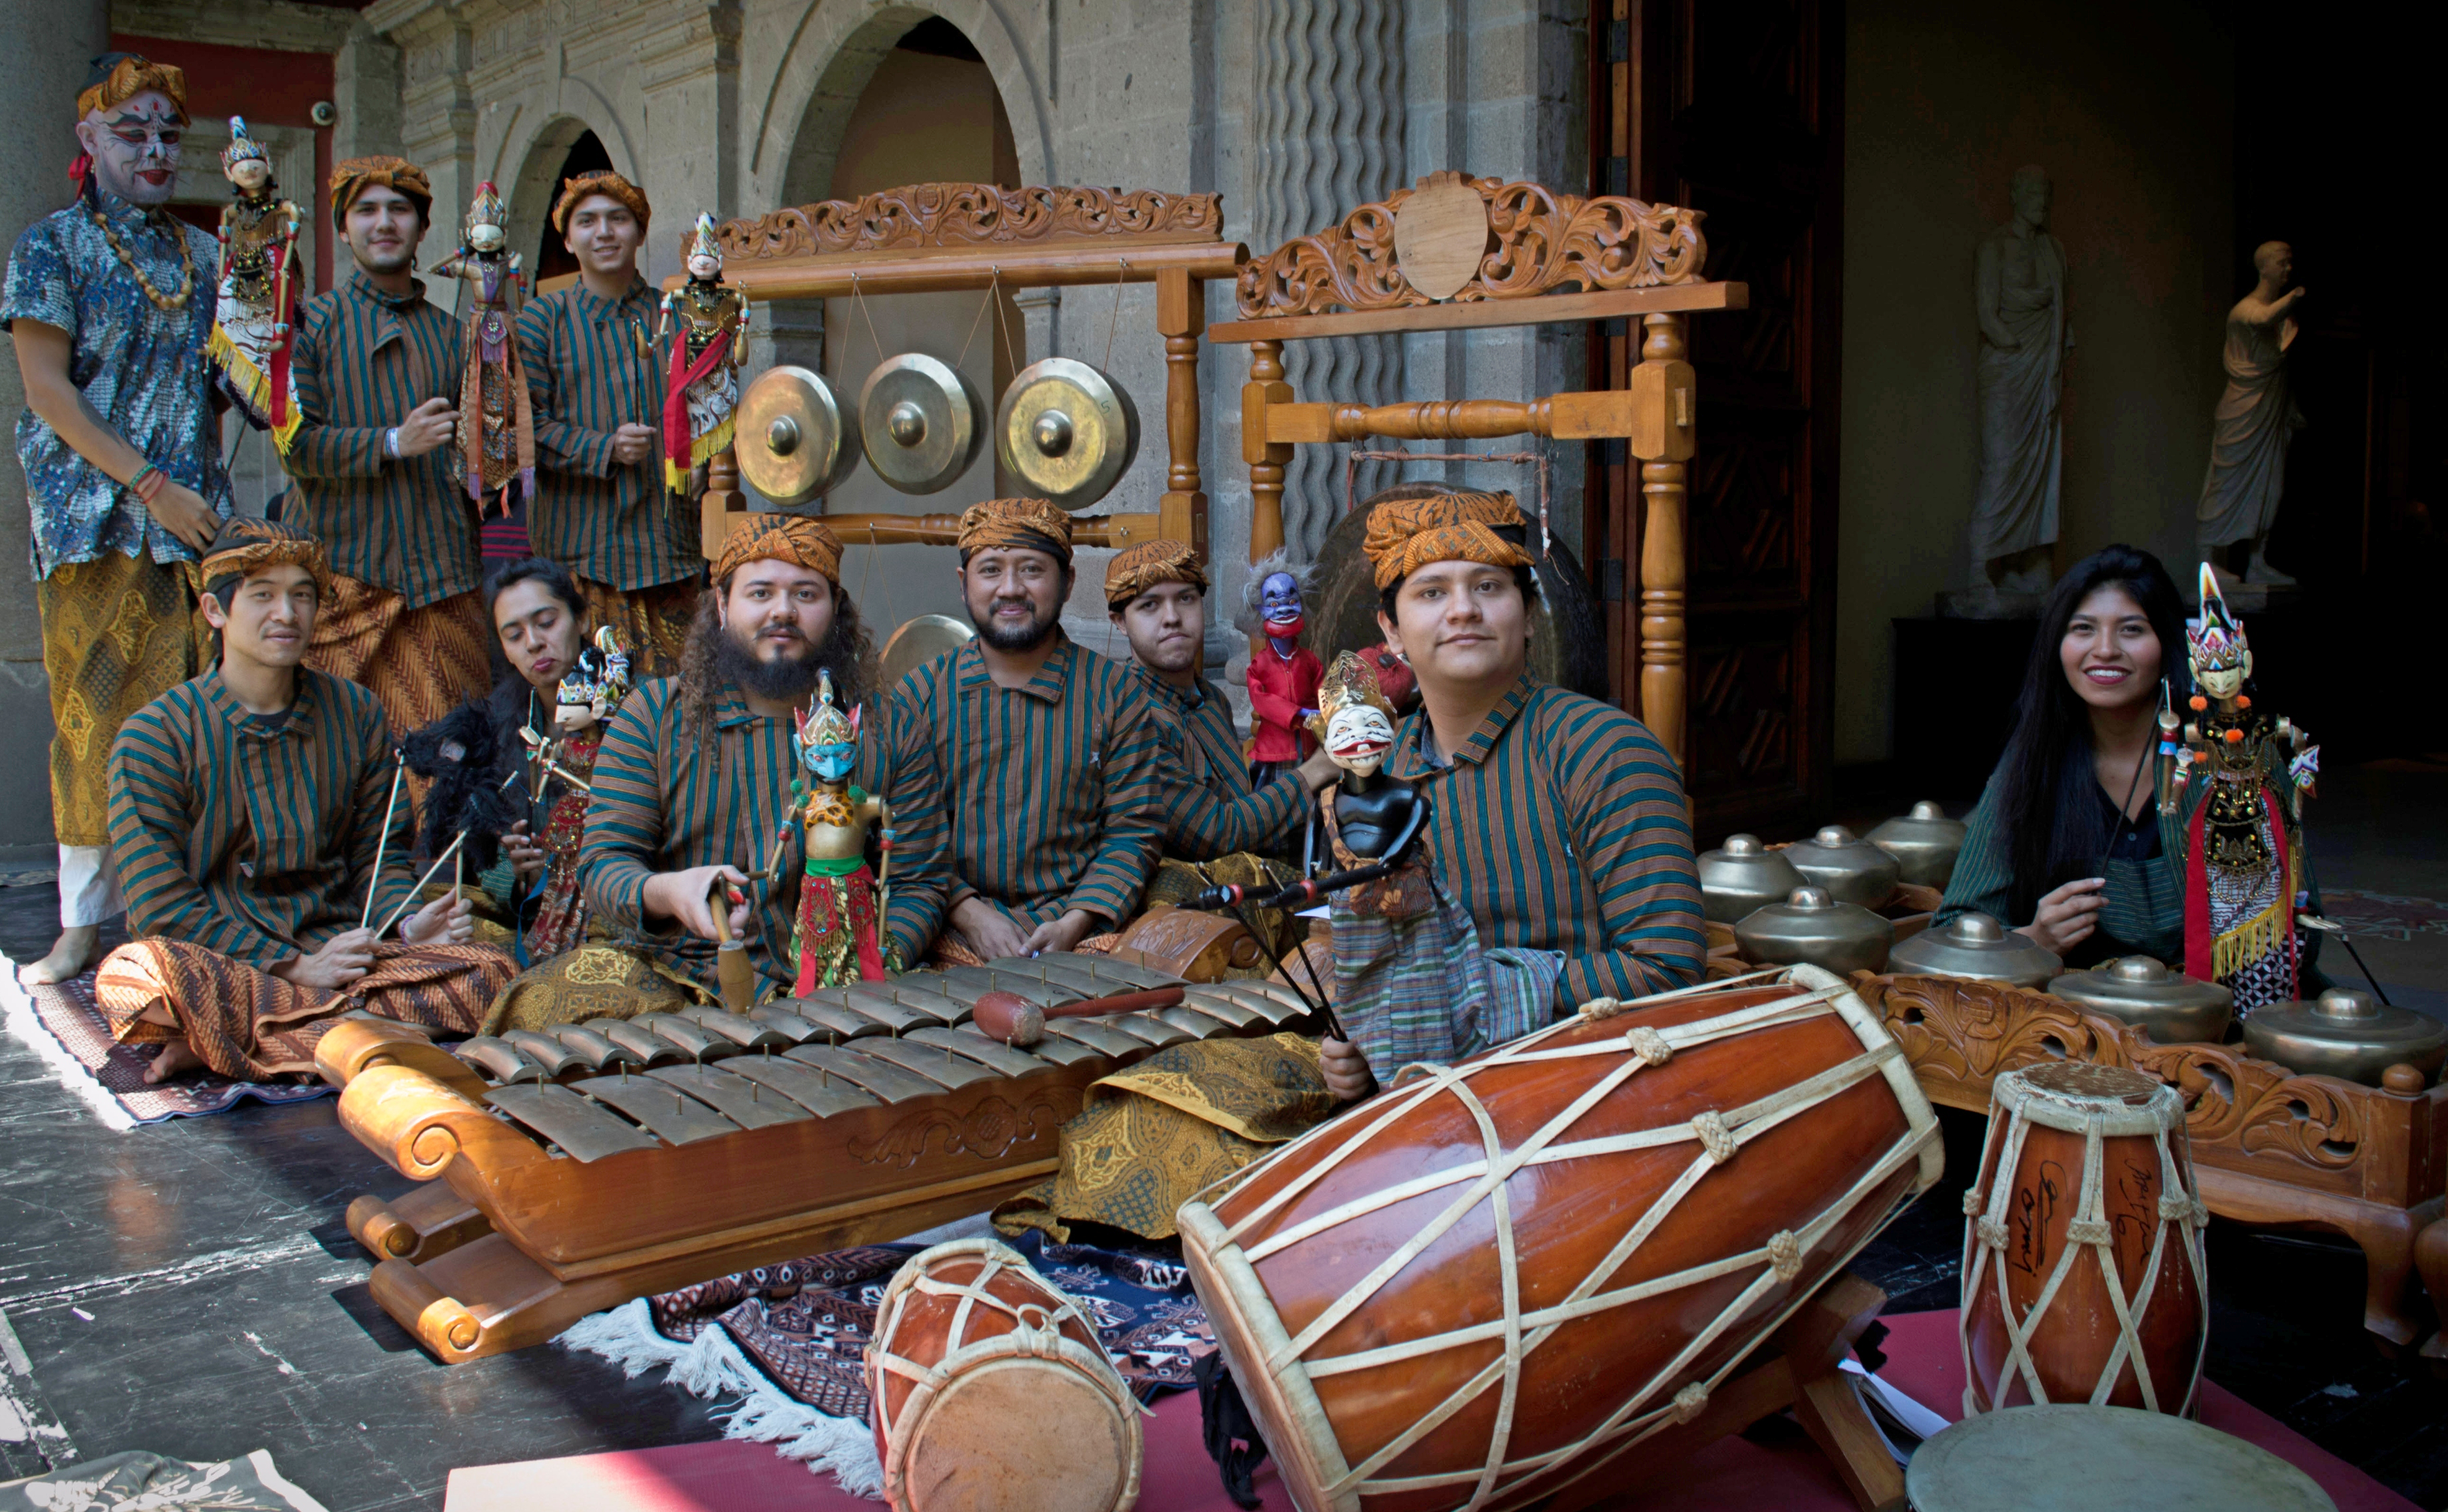 A Gamelan orchestra